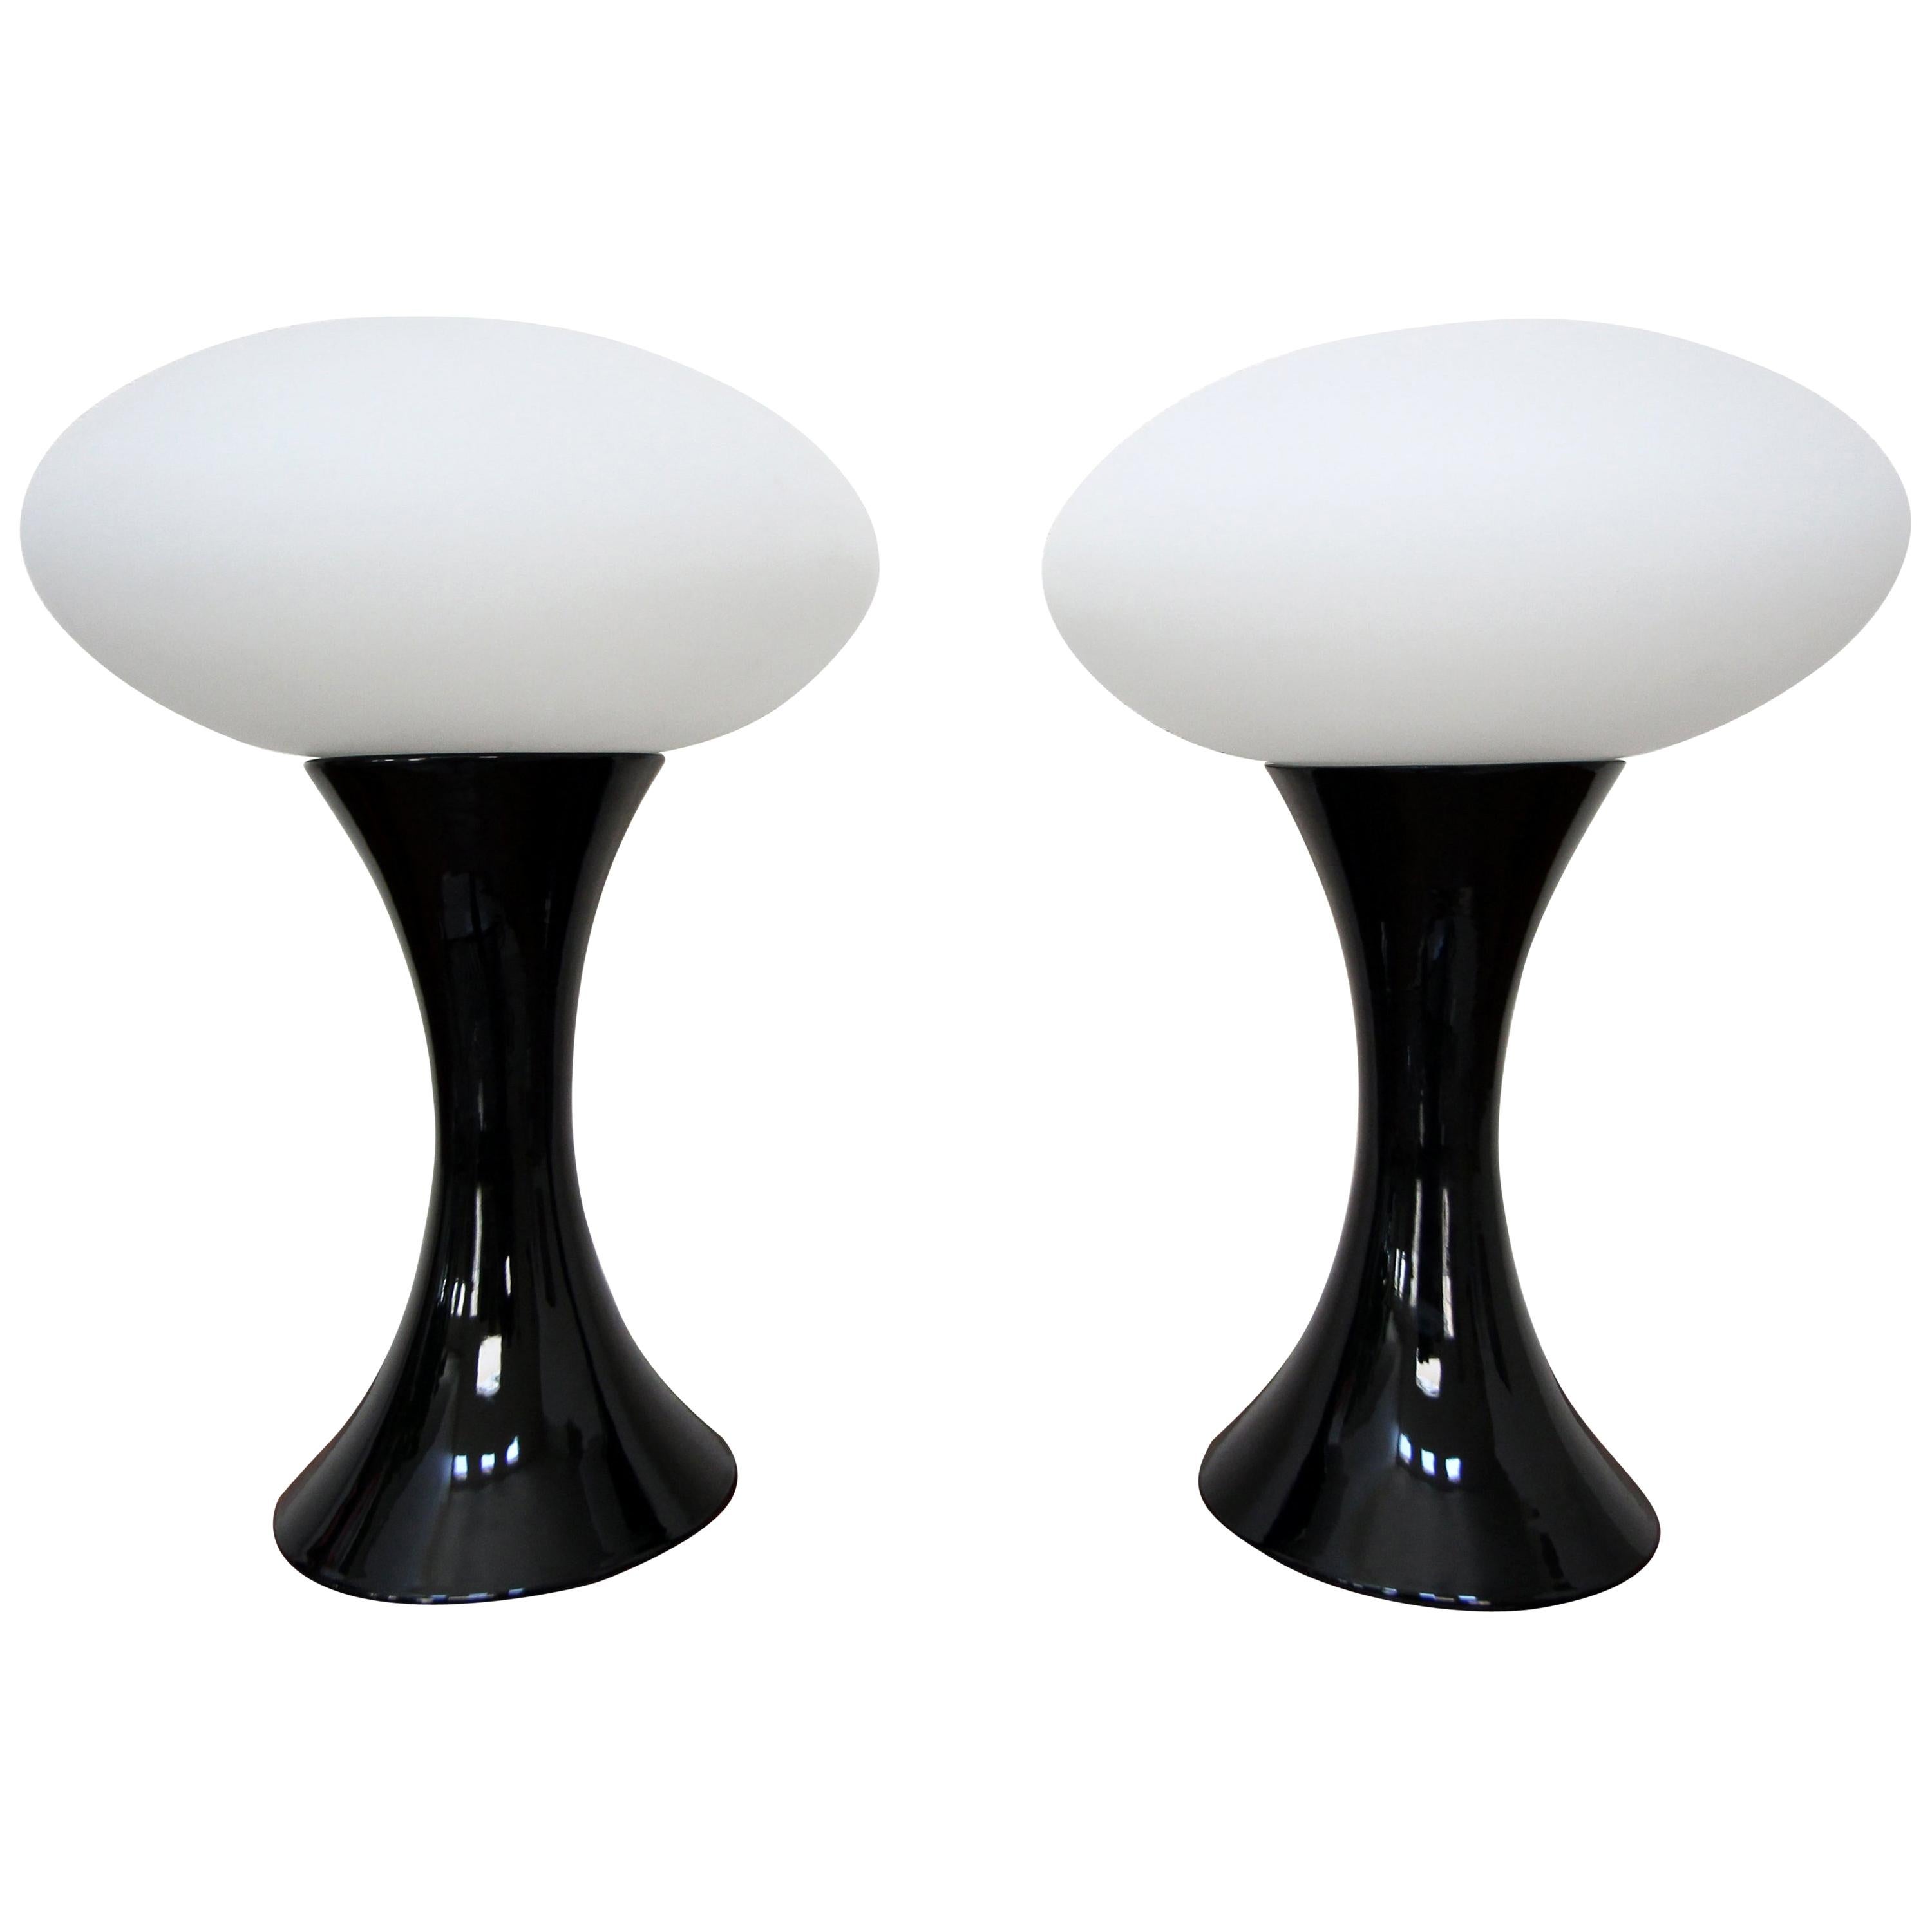 Pair of Midcentury Italian Black Ceramic and Porcelain Table Lamps